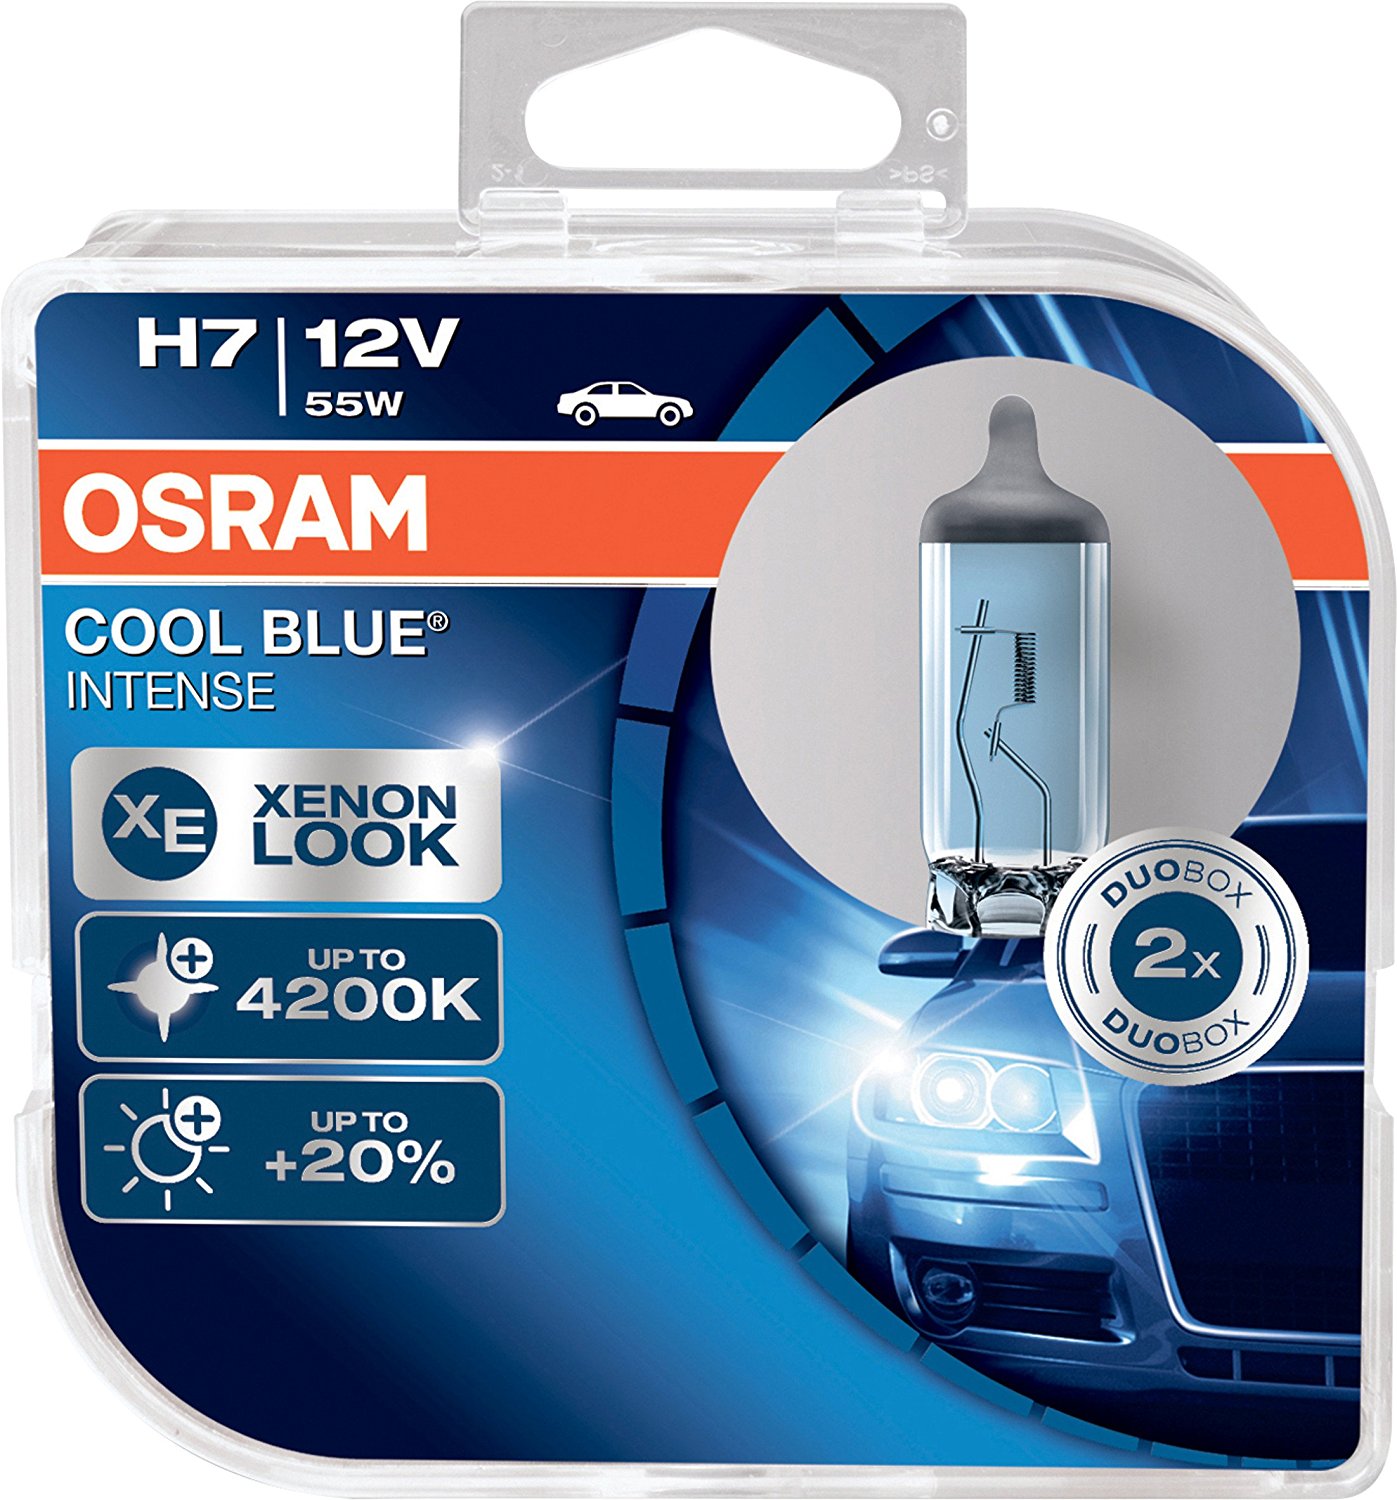 OSRAM COOL BLUE INTENSE H7